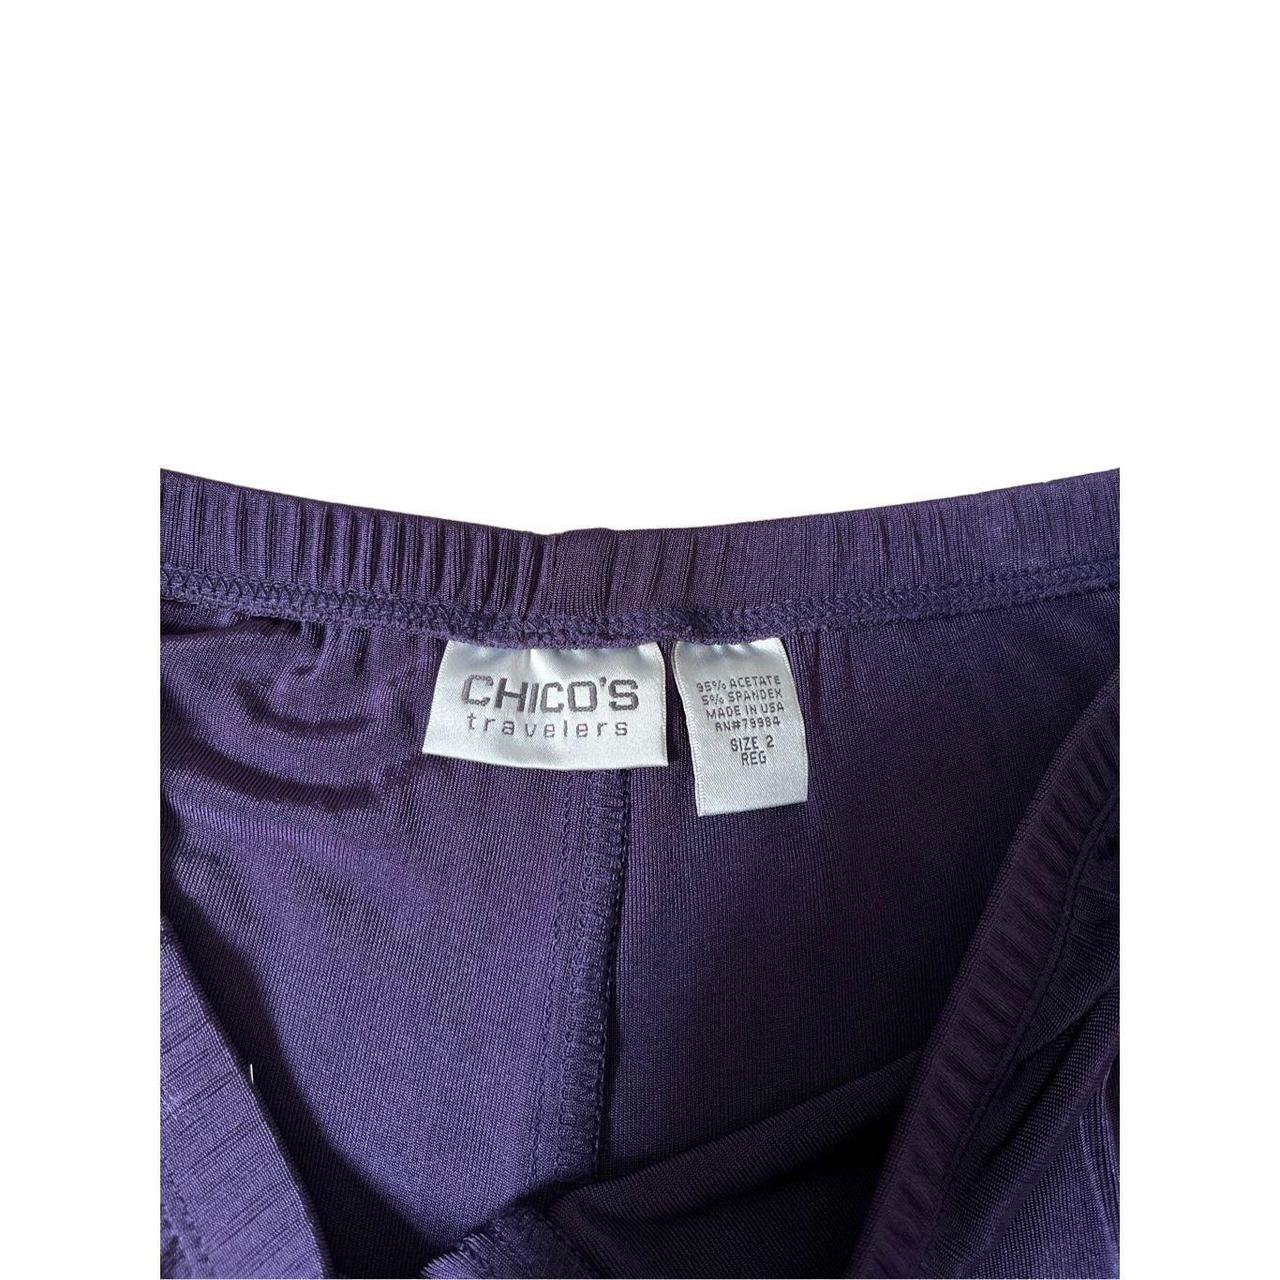 Chico's travelers pull on dressy pants purple size - Depop